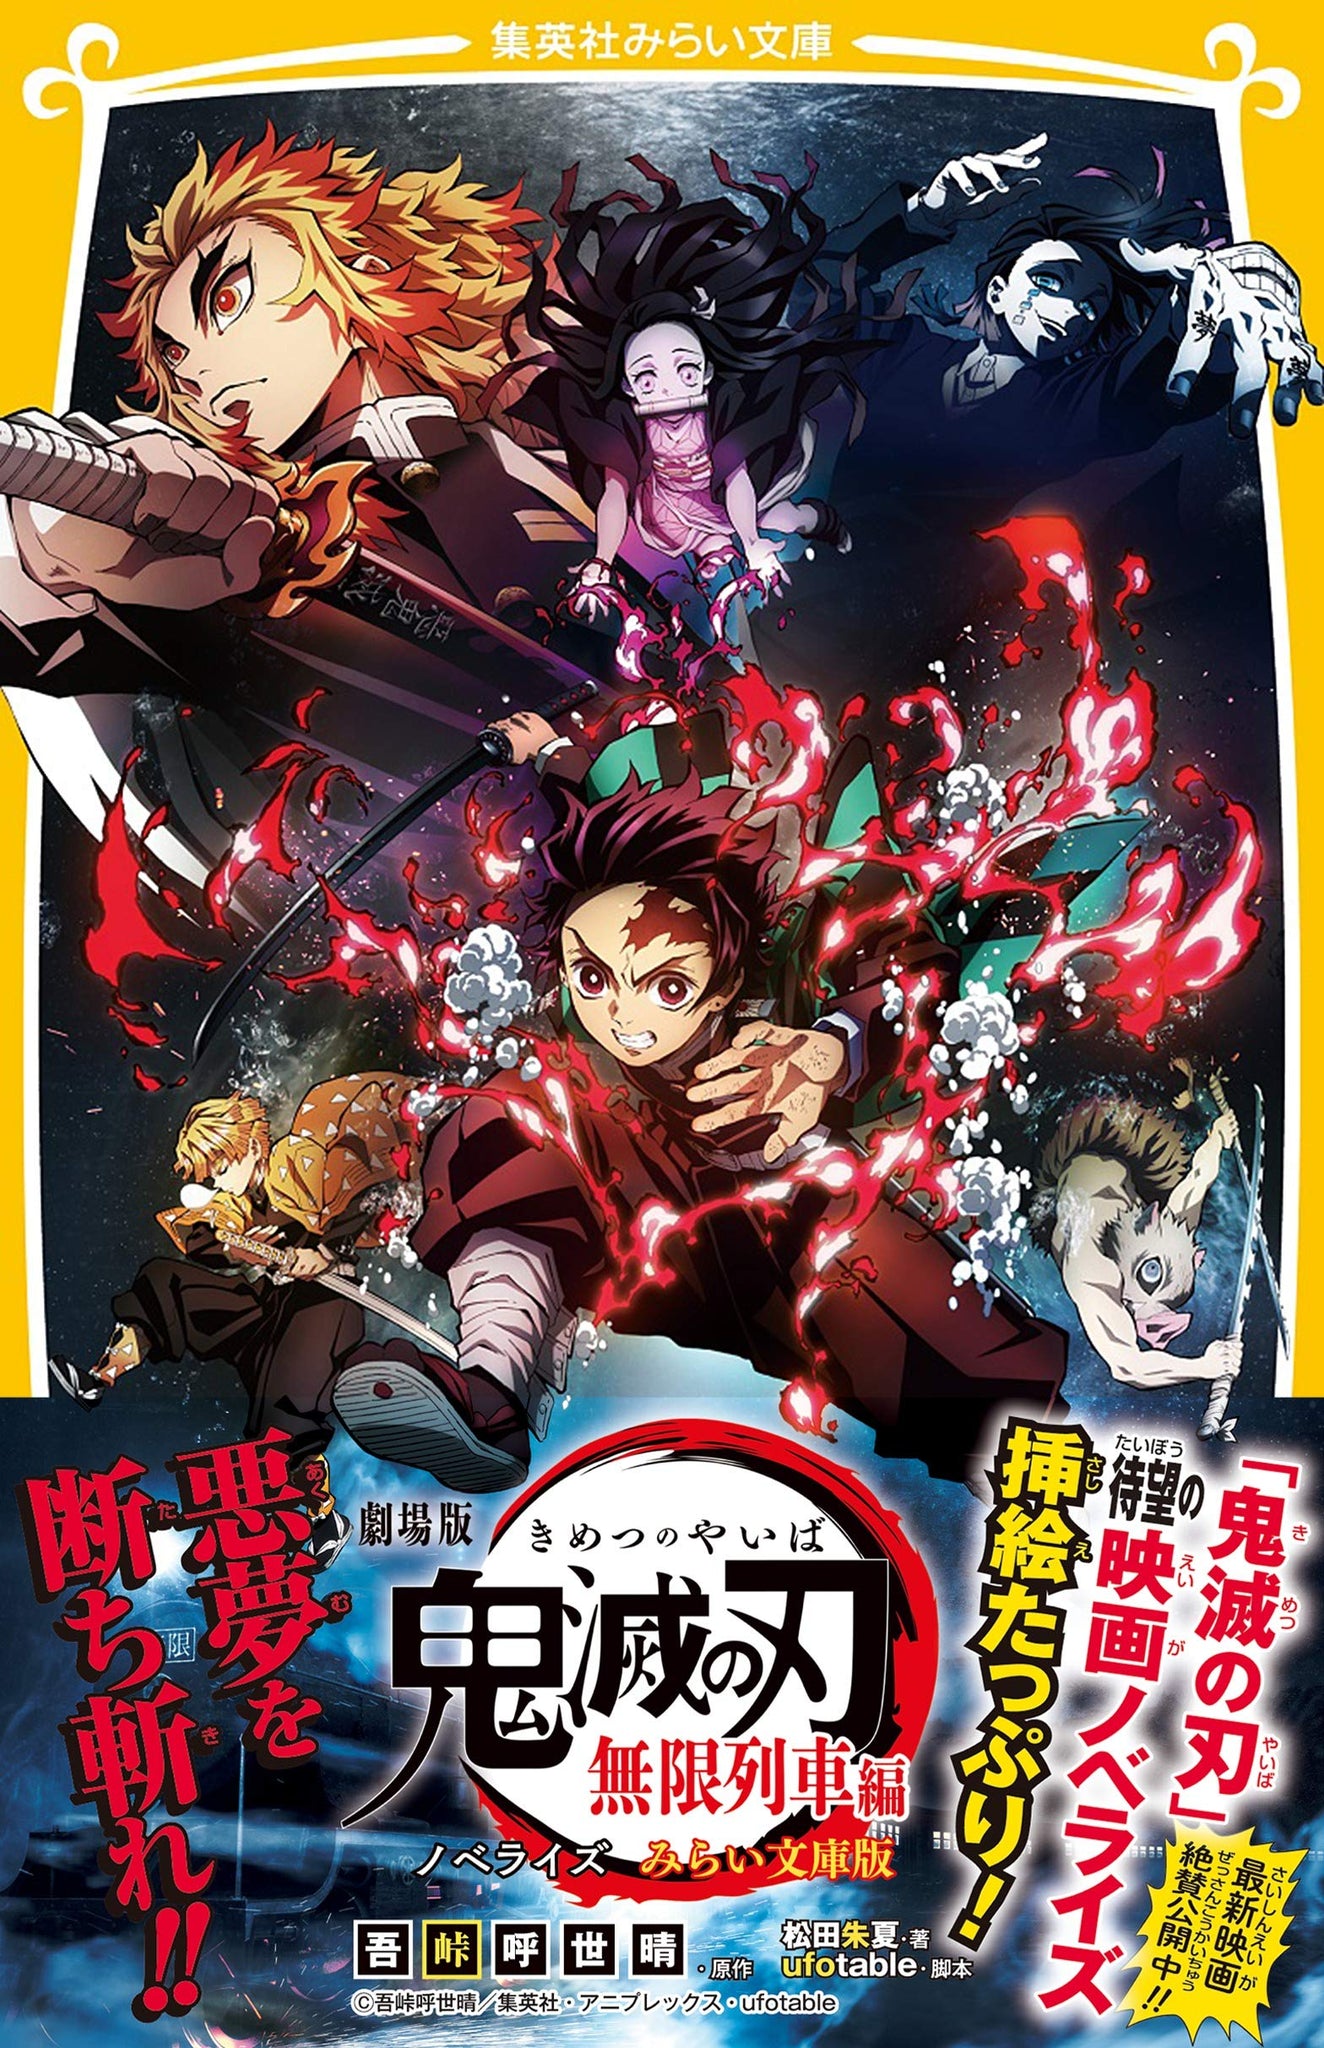 Demon Slayer - Kimetsu no Yaiba - The Movie - Mugen Train Limited Edition  Limited edition